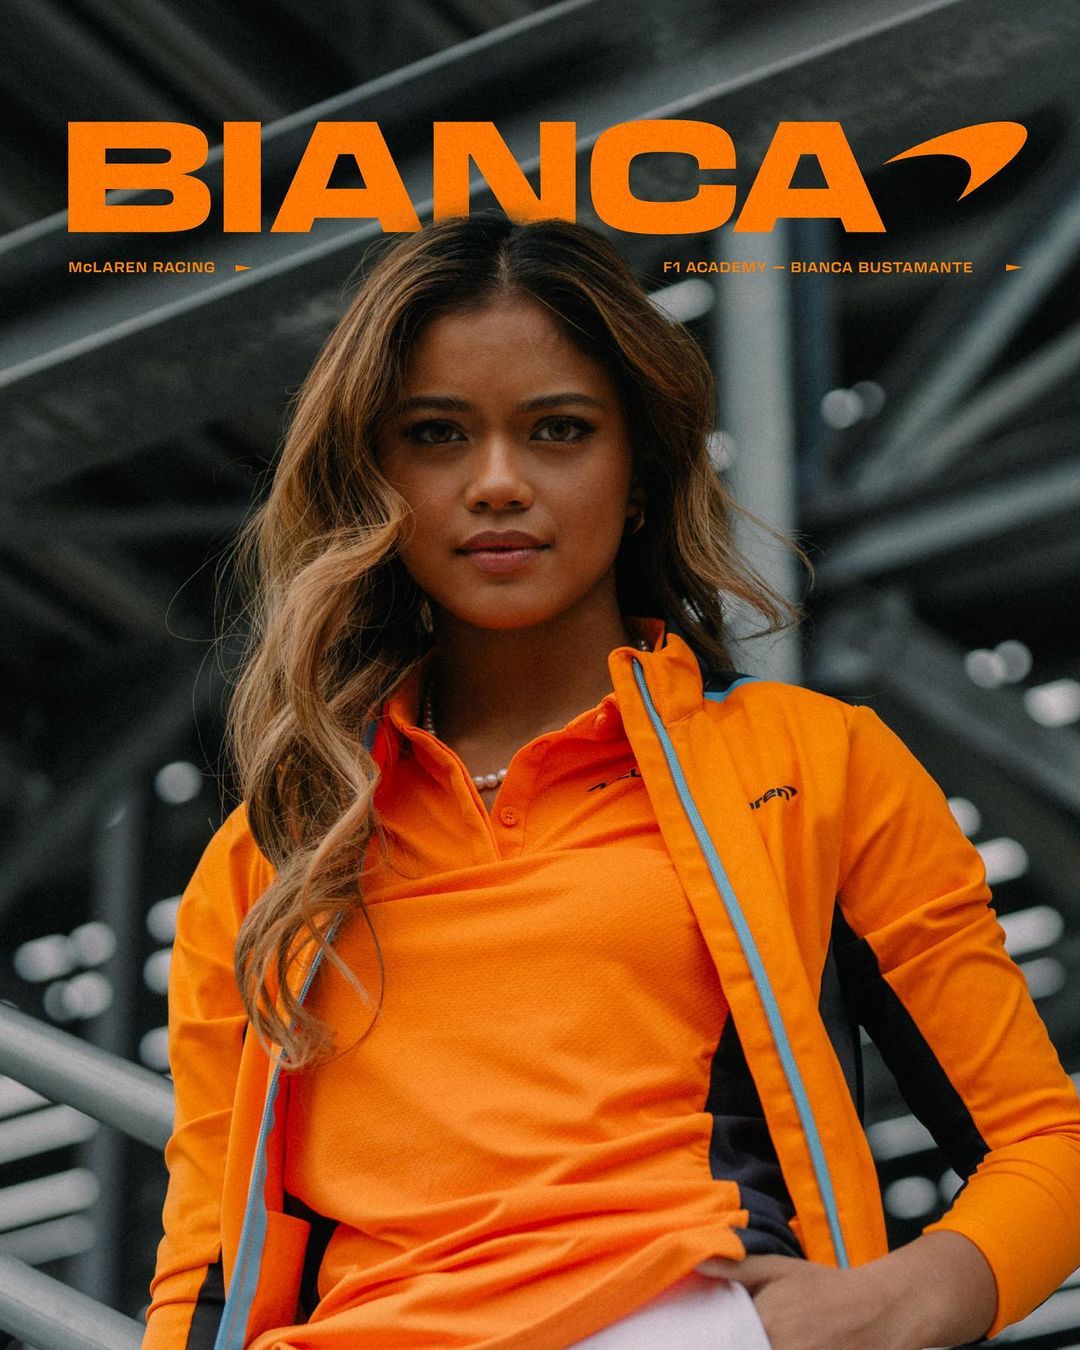 Bianca Bustamante is McLaren's first-ever female development driver